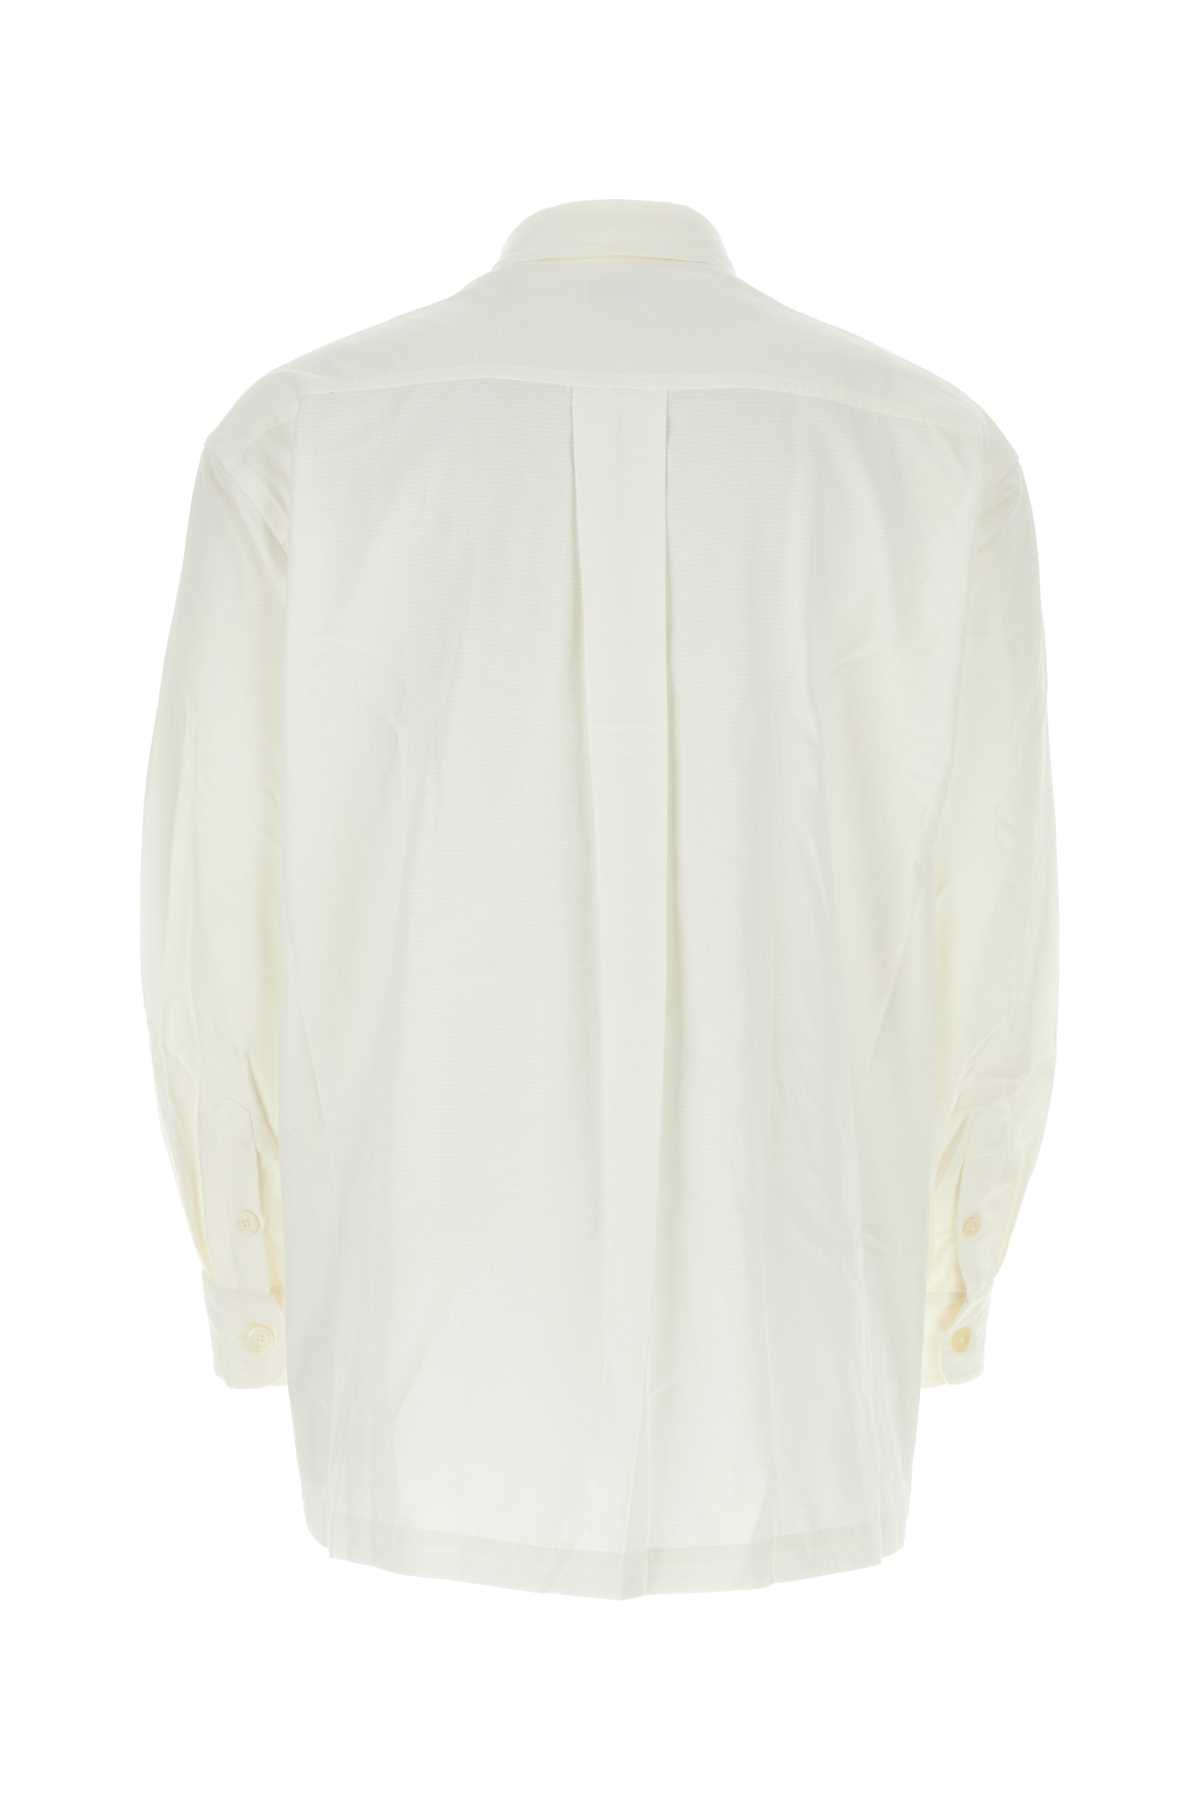 Kenzo White Cotton Oversize Shirt In Offwhite